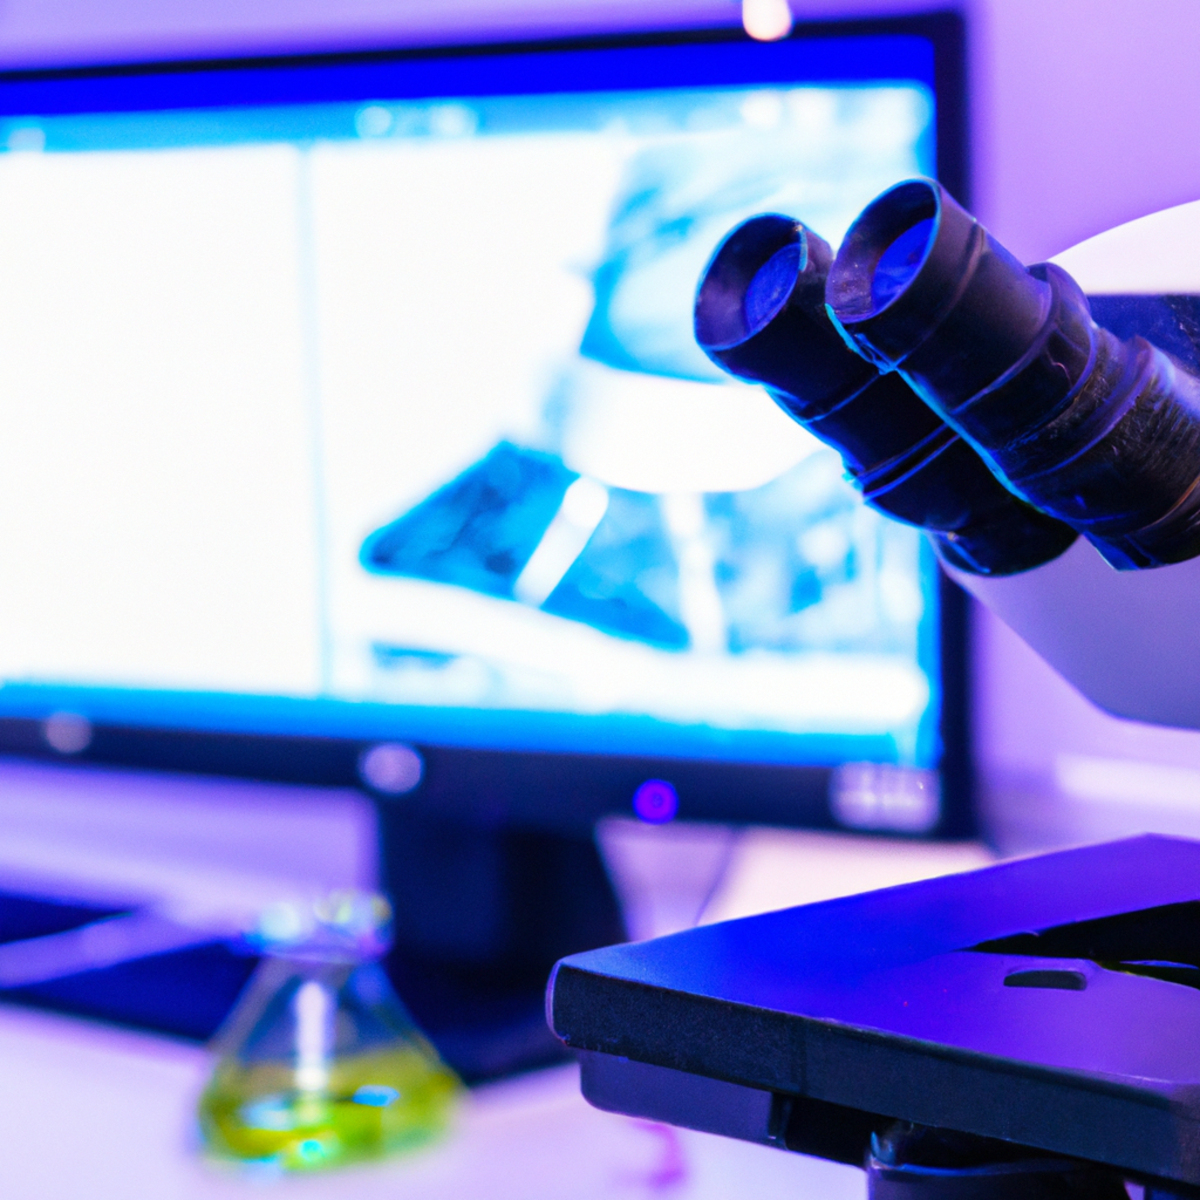 Cutting-edge lab setup with microscope, petri dish, computer screen, and vibrant substances, symbolizing progress in cystic fibrosis treatment.